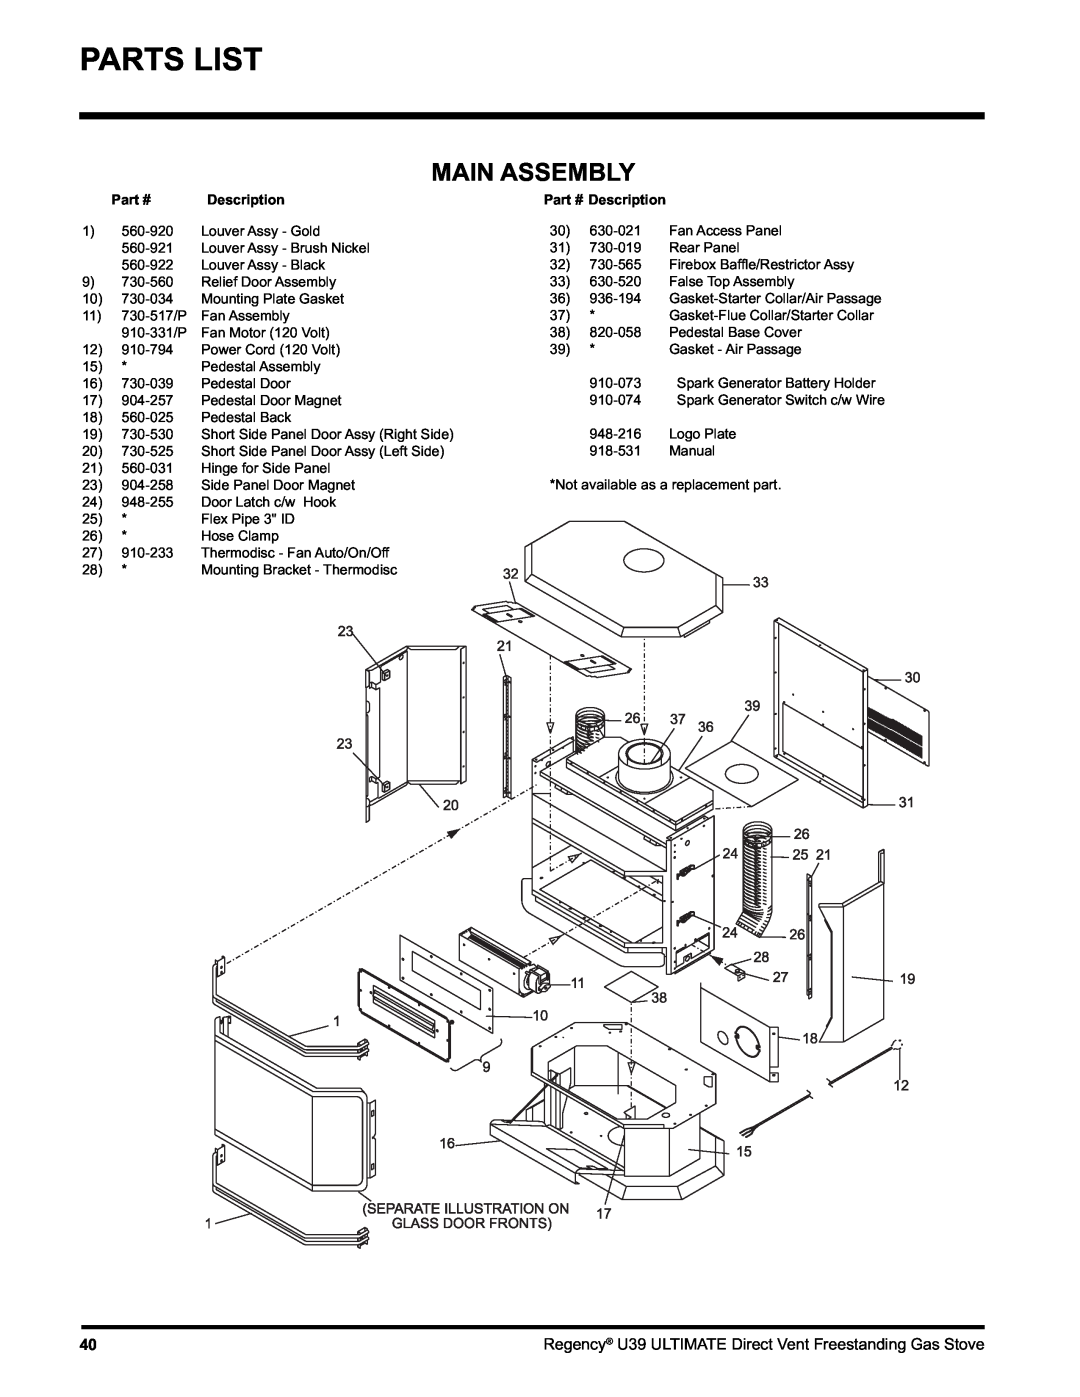 Regency U39-LP1, U39-NG1 installation manual Parts List, Main Assembly, Description 